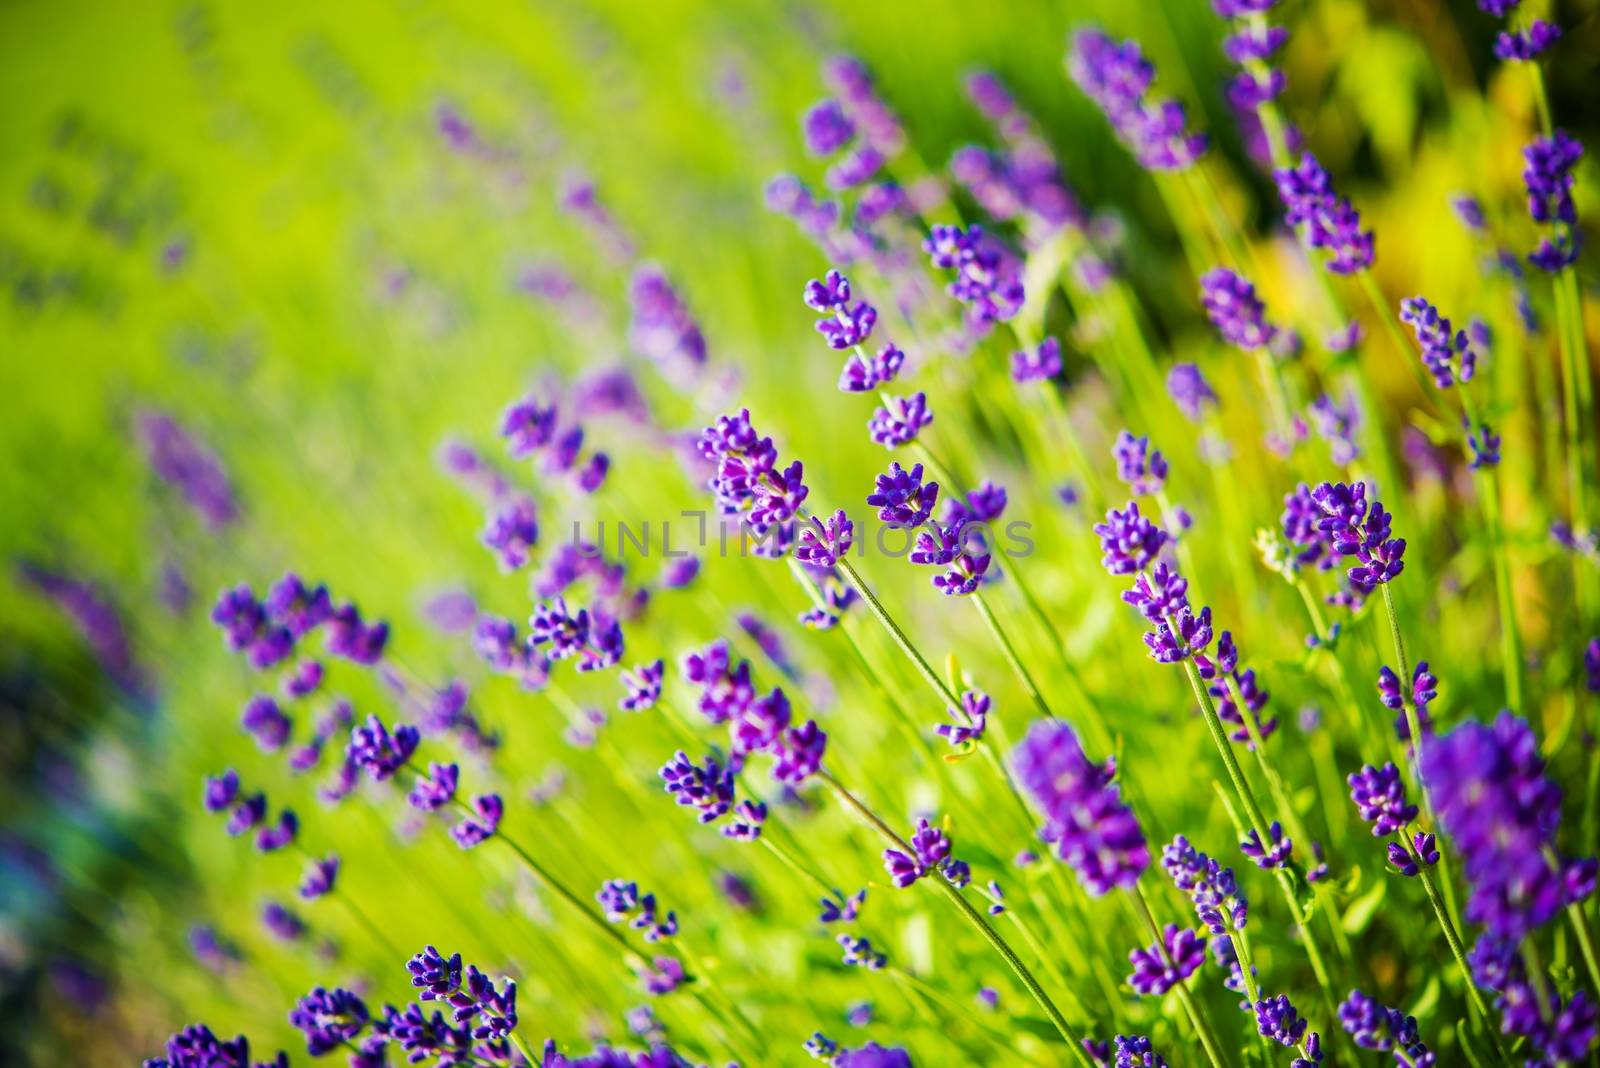 Blossom Purple Wildflowers Closeup Photo. Summertime Wildflowers.